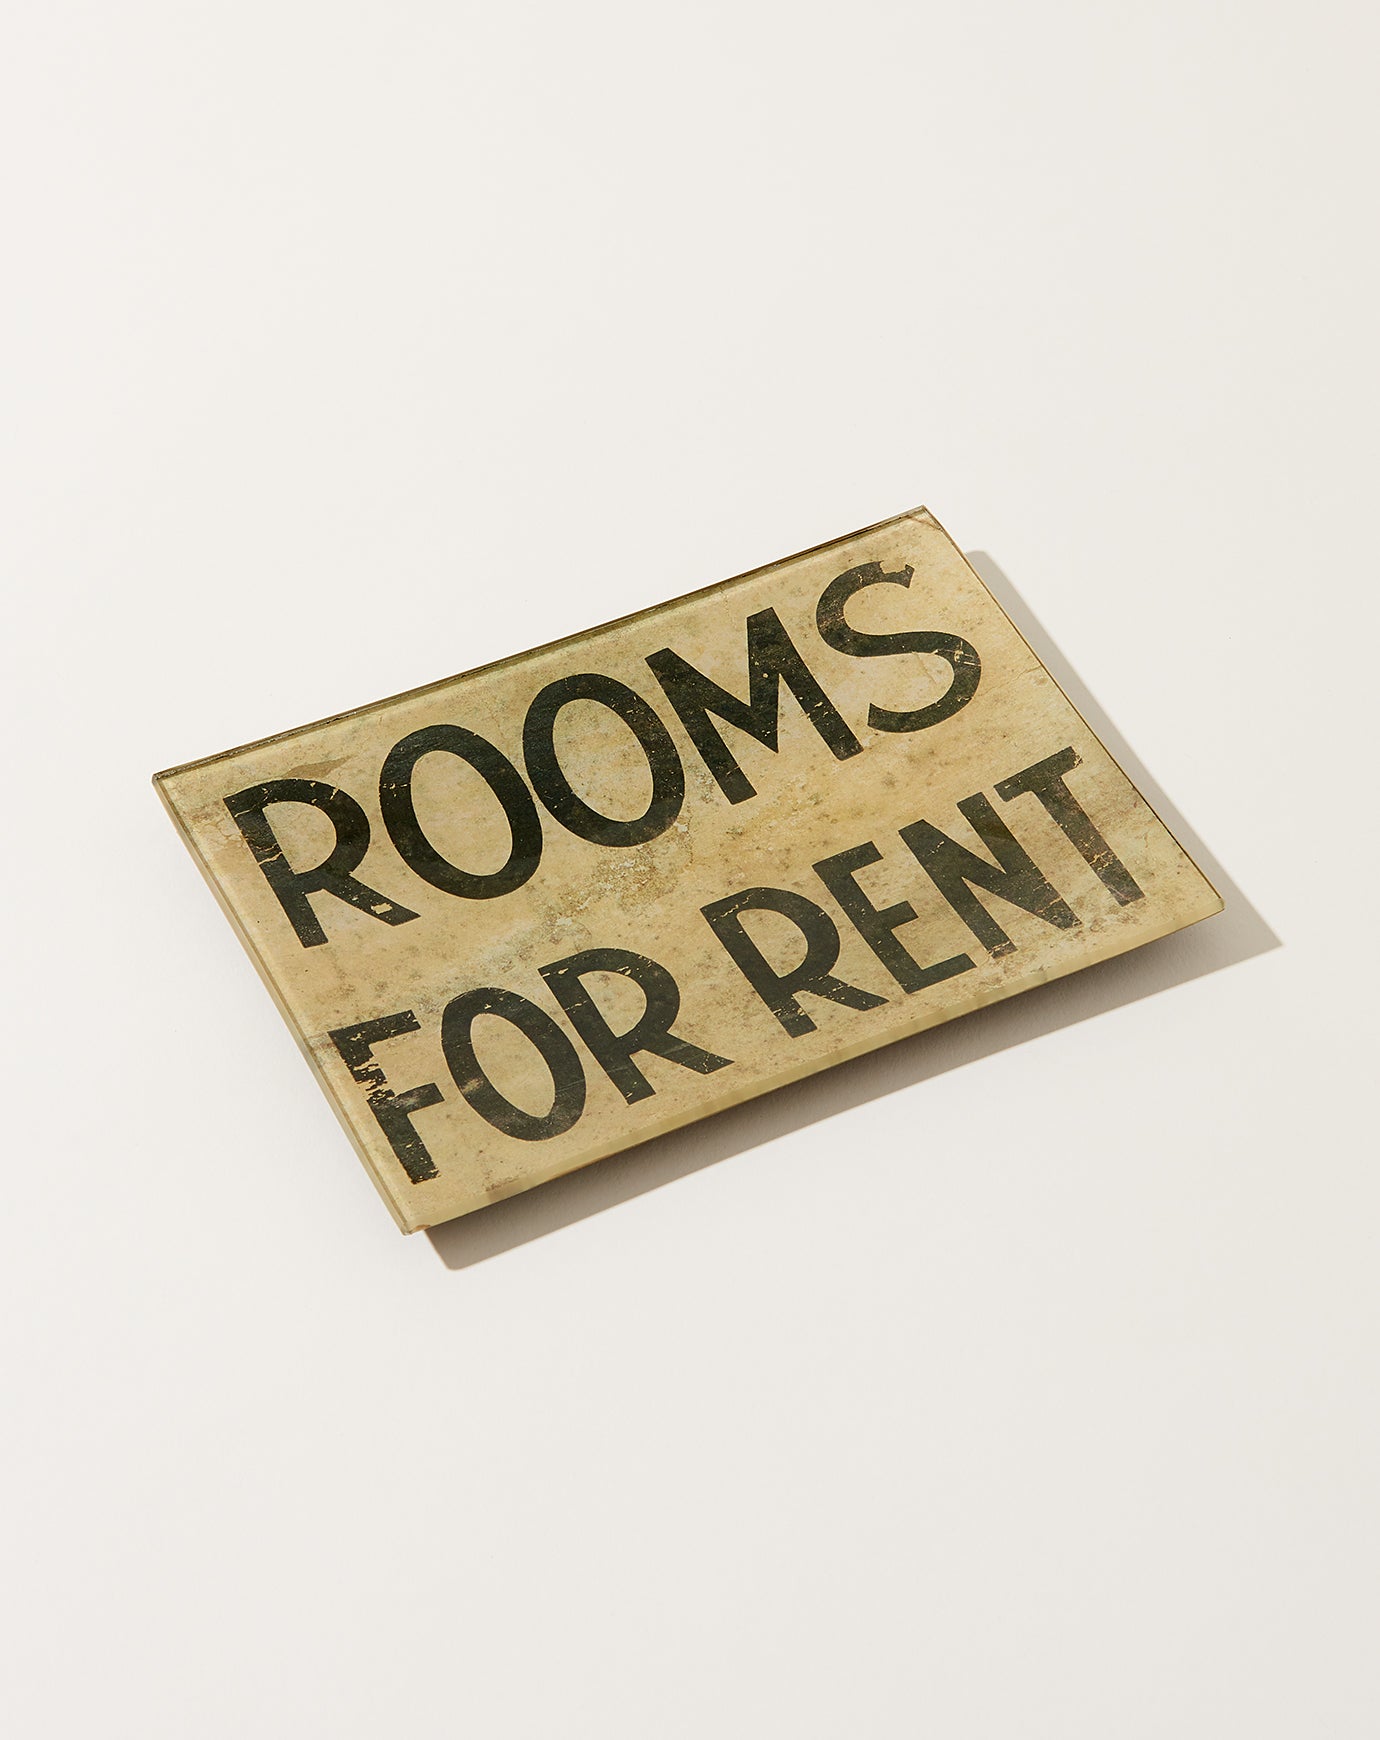 John Derian Rooms For Rent Mini Tray